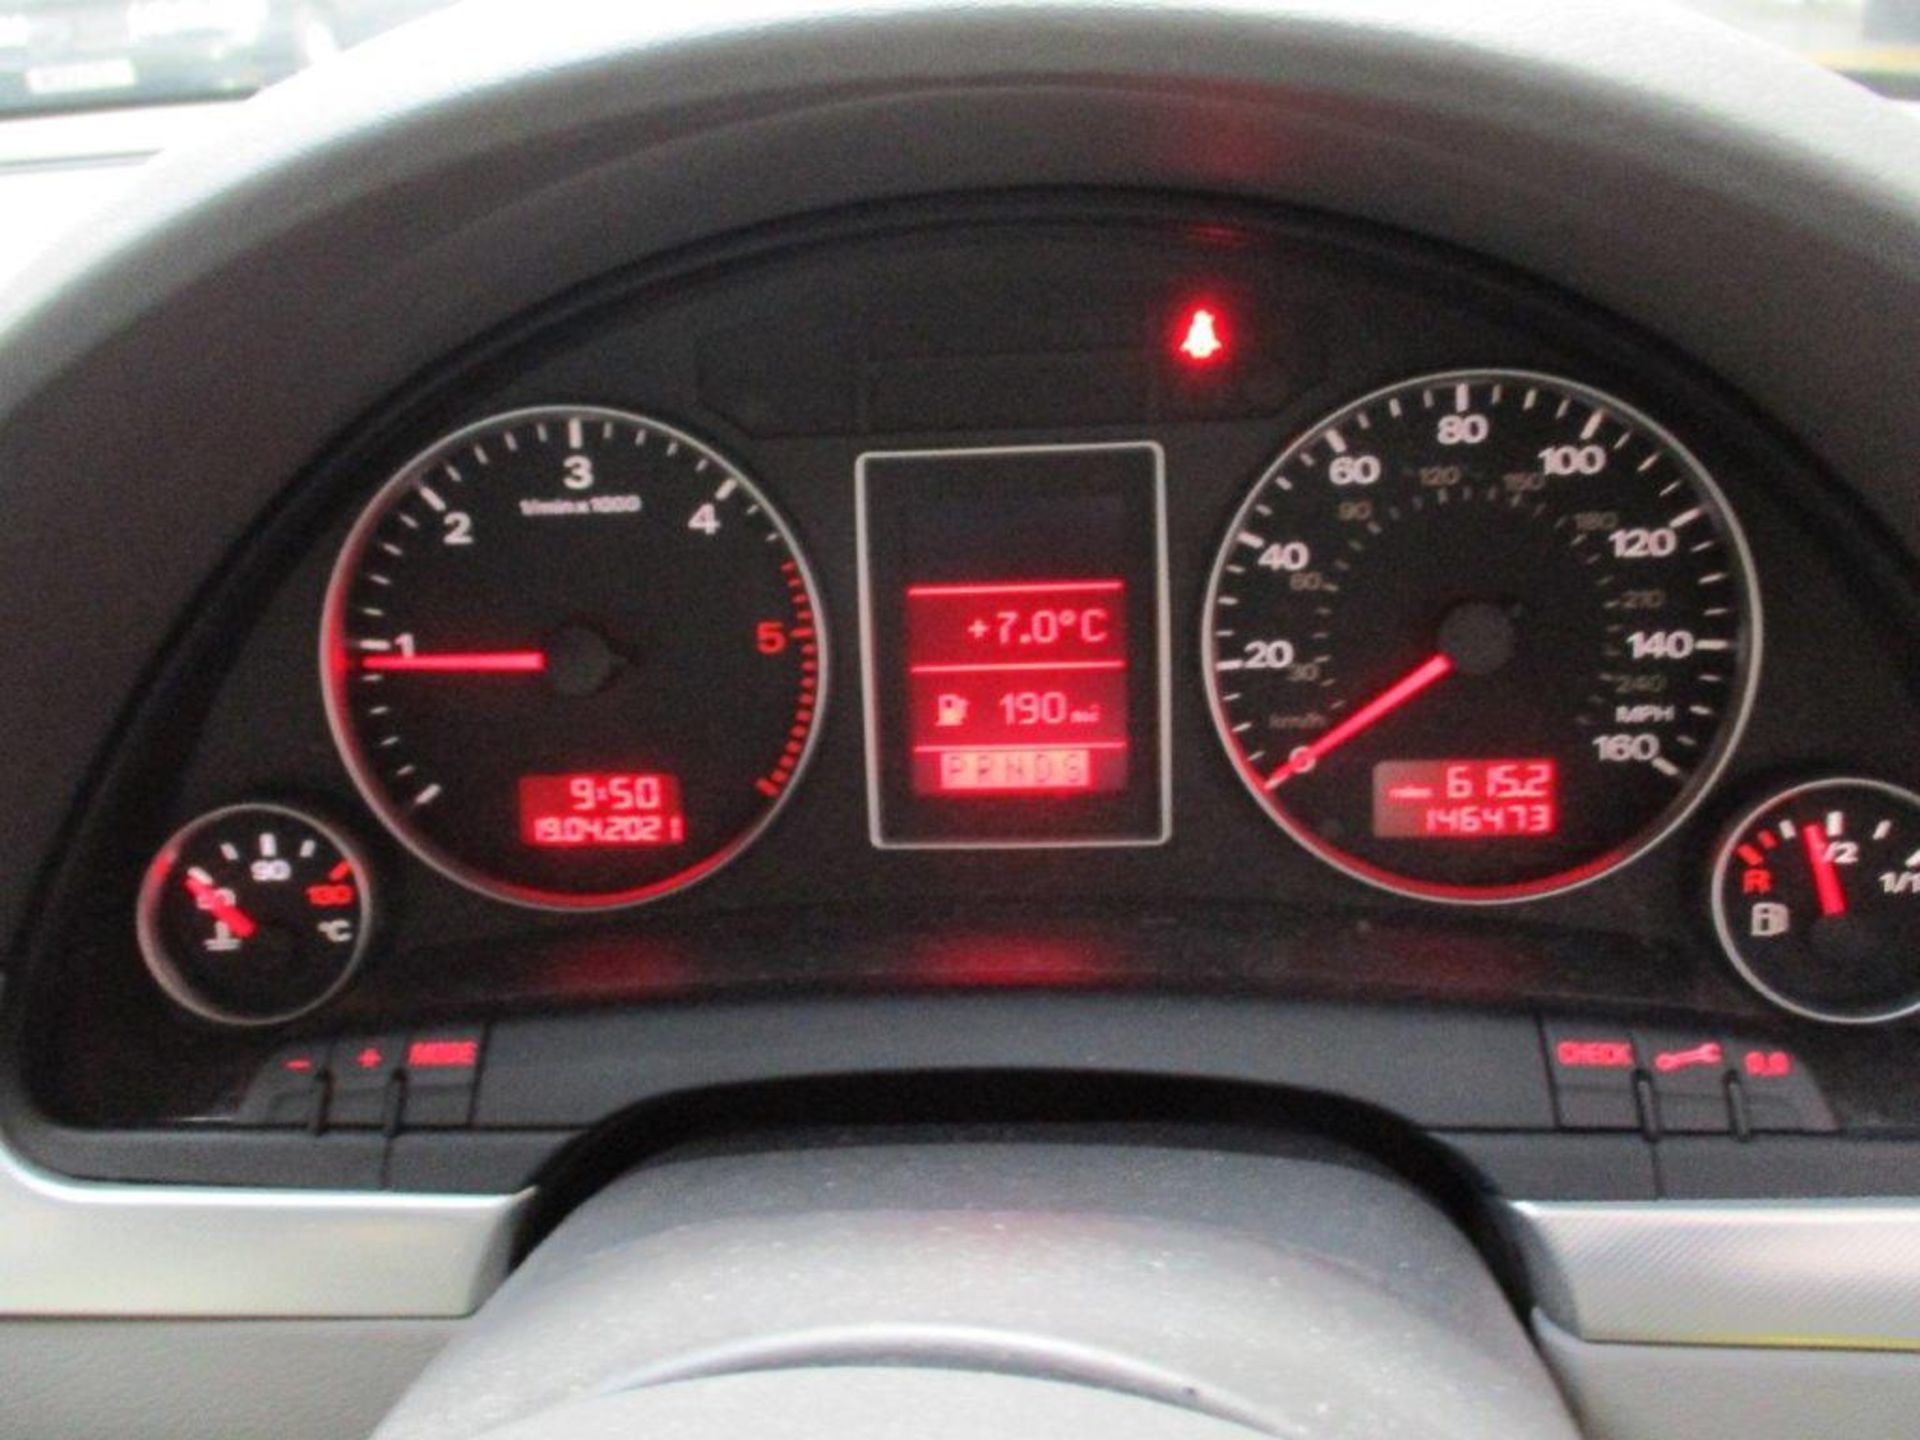 07 07 Audi A4 S Line TDI Auto - Image 19 of 27